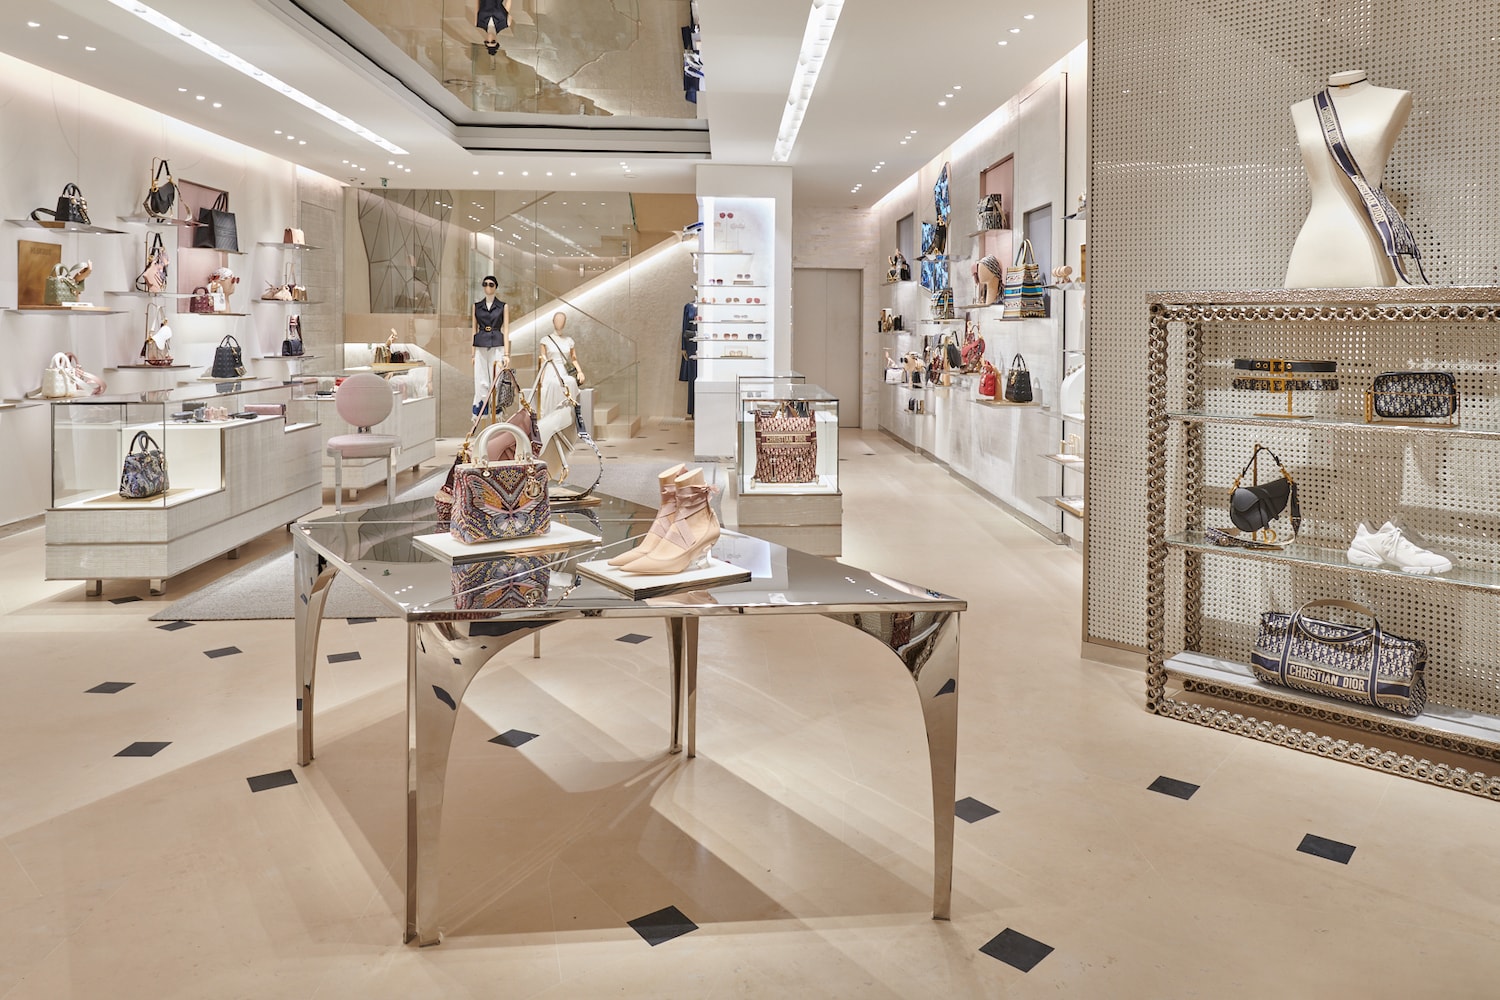 Dior 于摩纳哥开设全新精品店